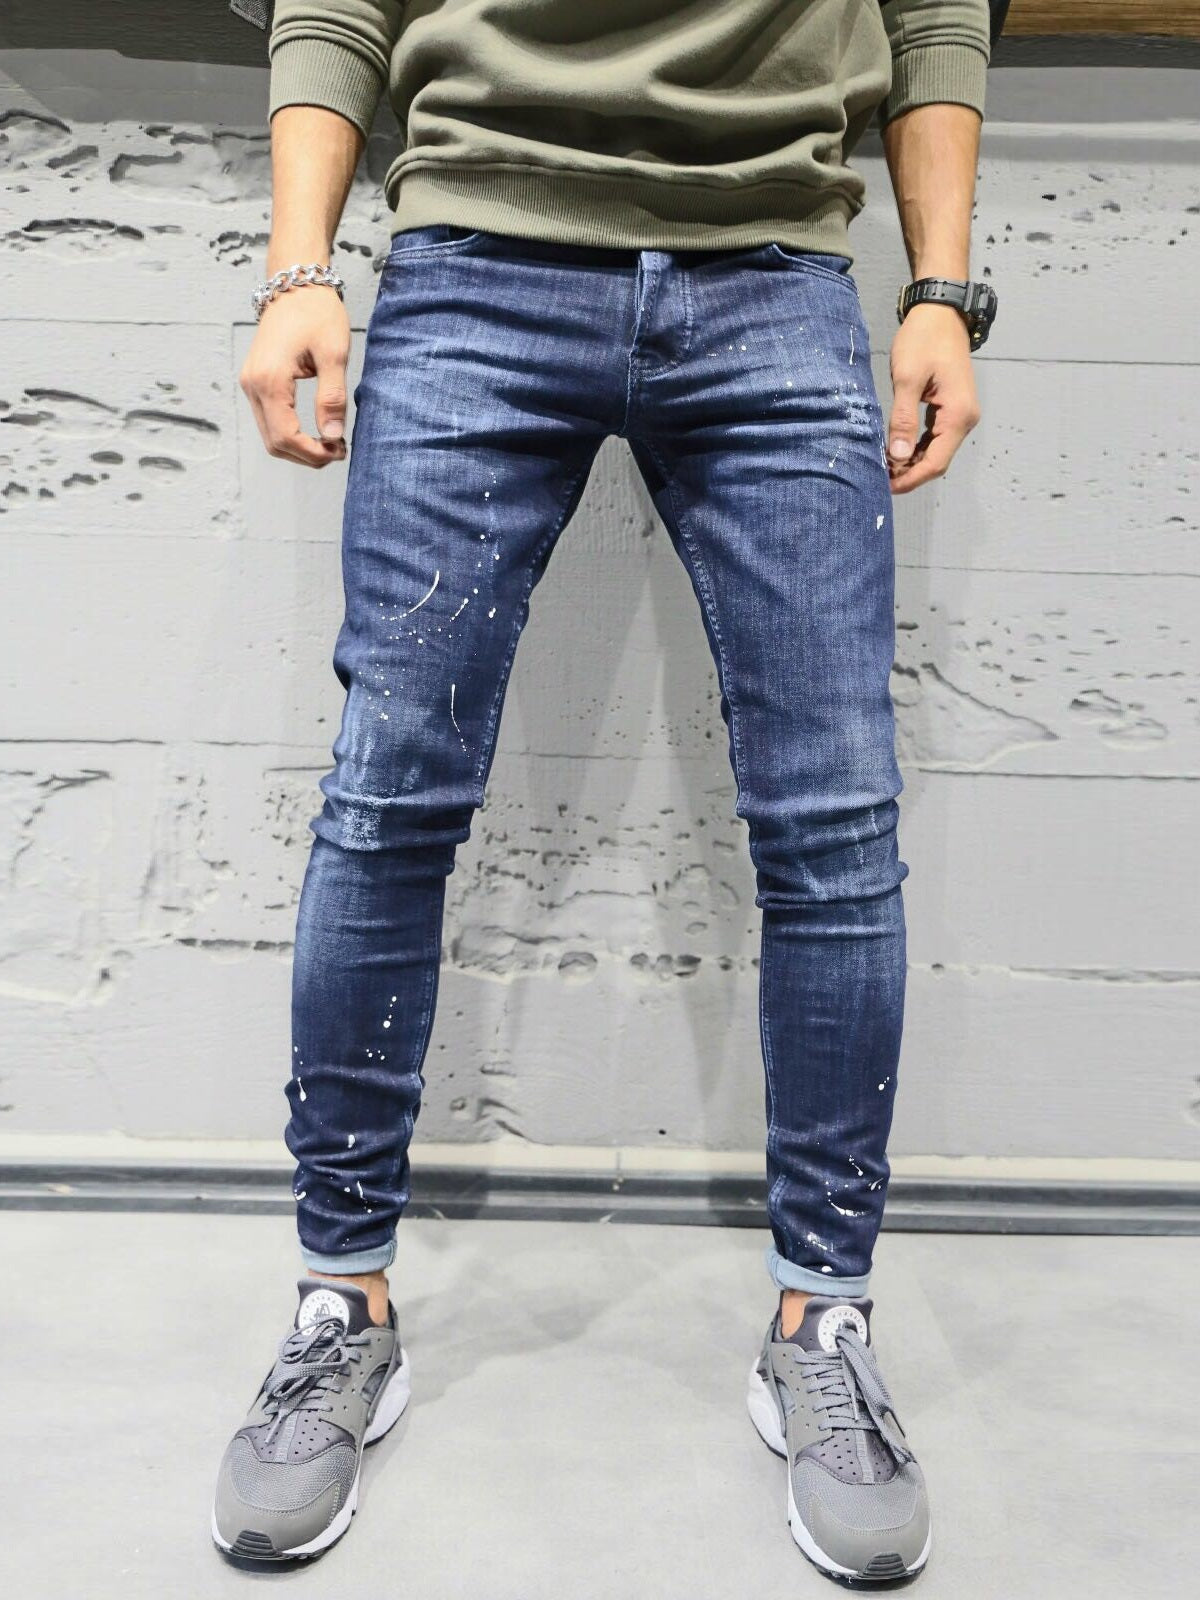 mens slim blue jeans